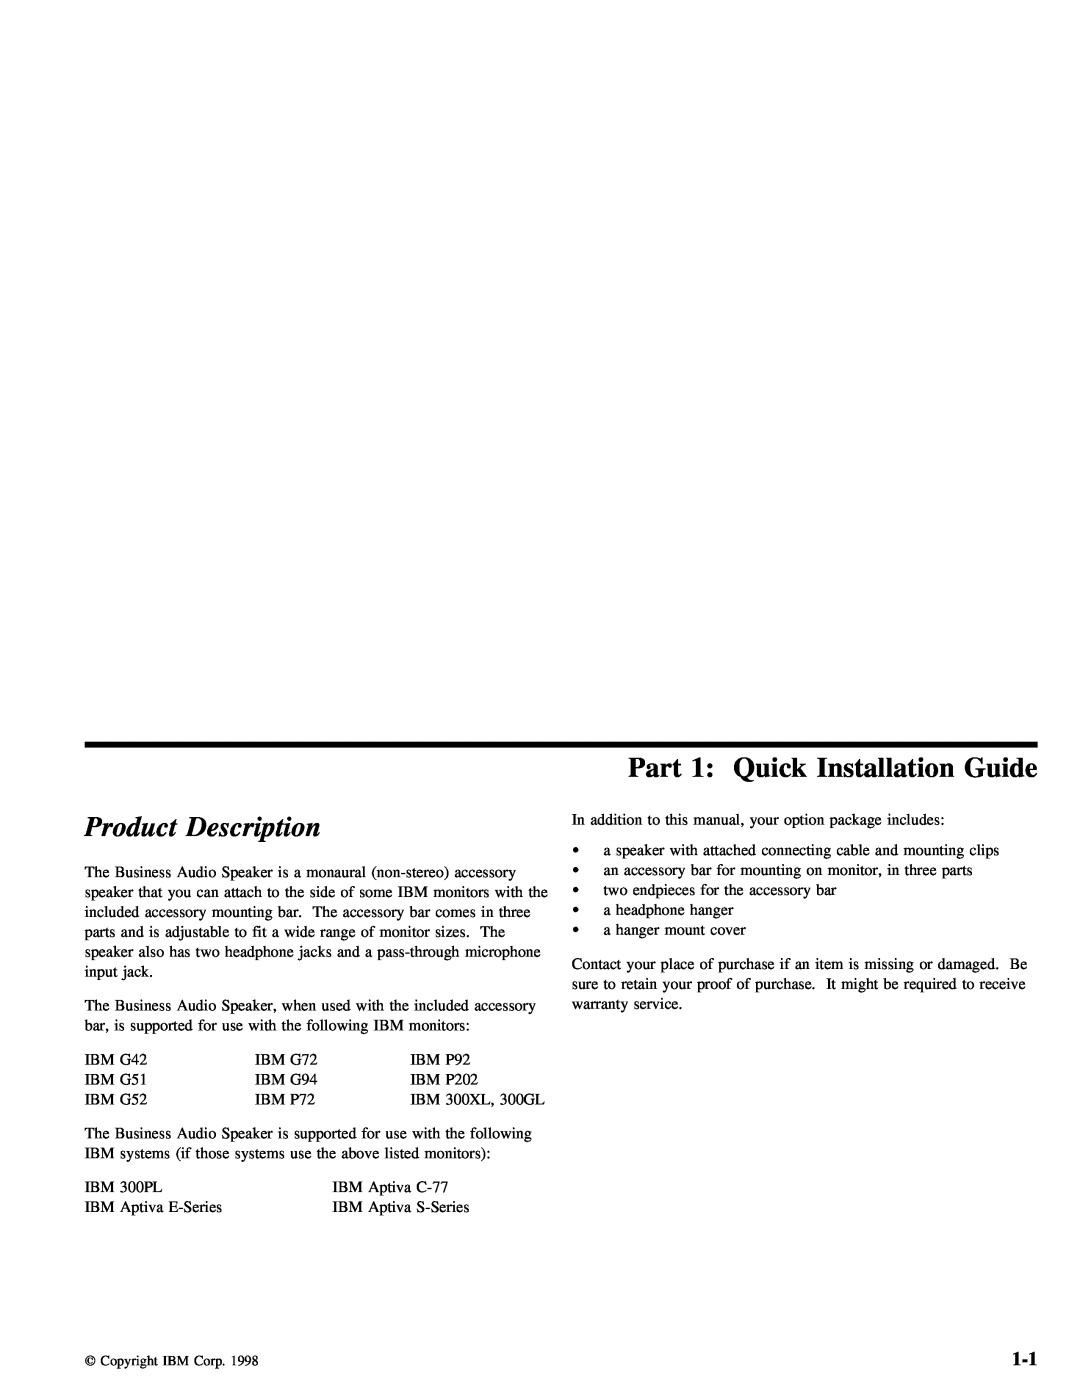 IBM 05L1596 manual Part 1 Quick Installation Guide, Product Description 